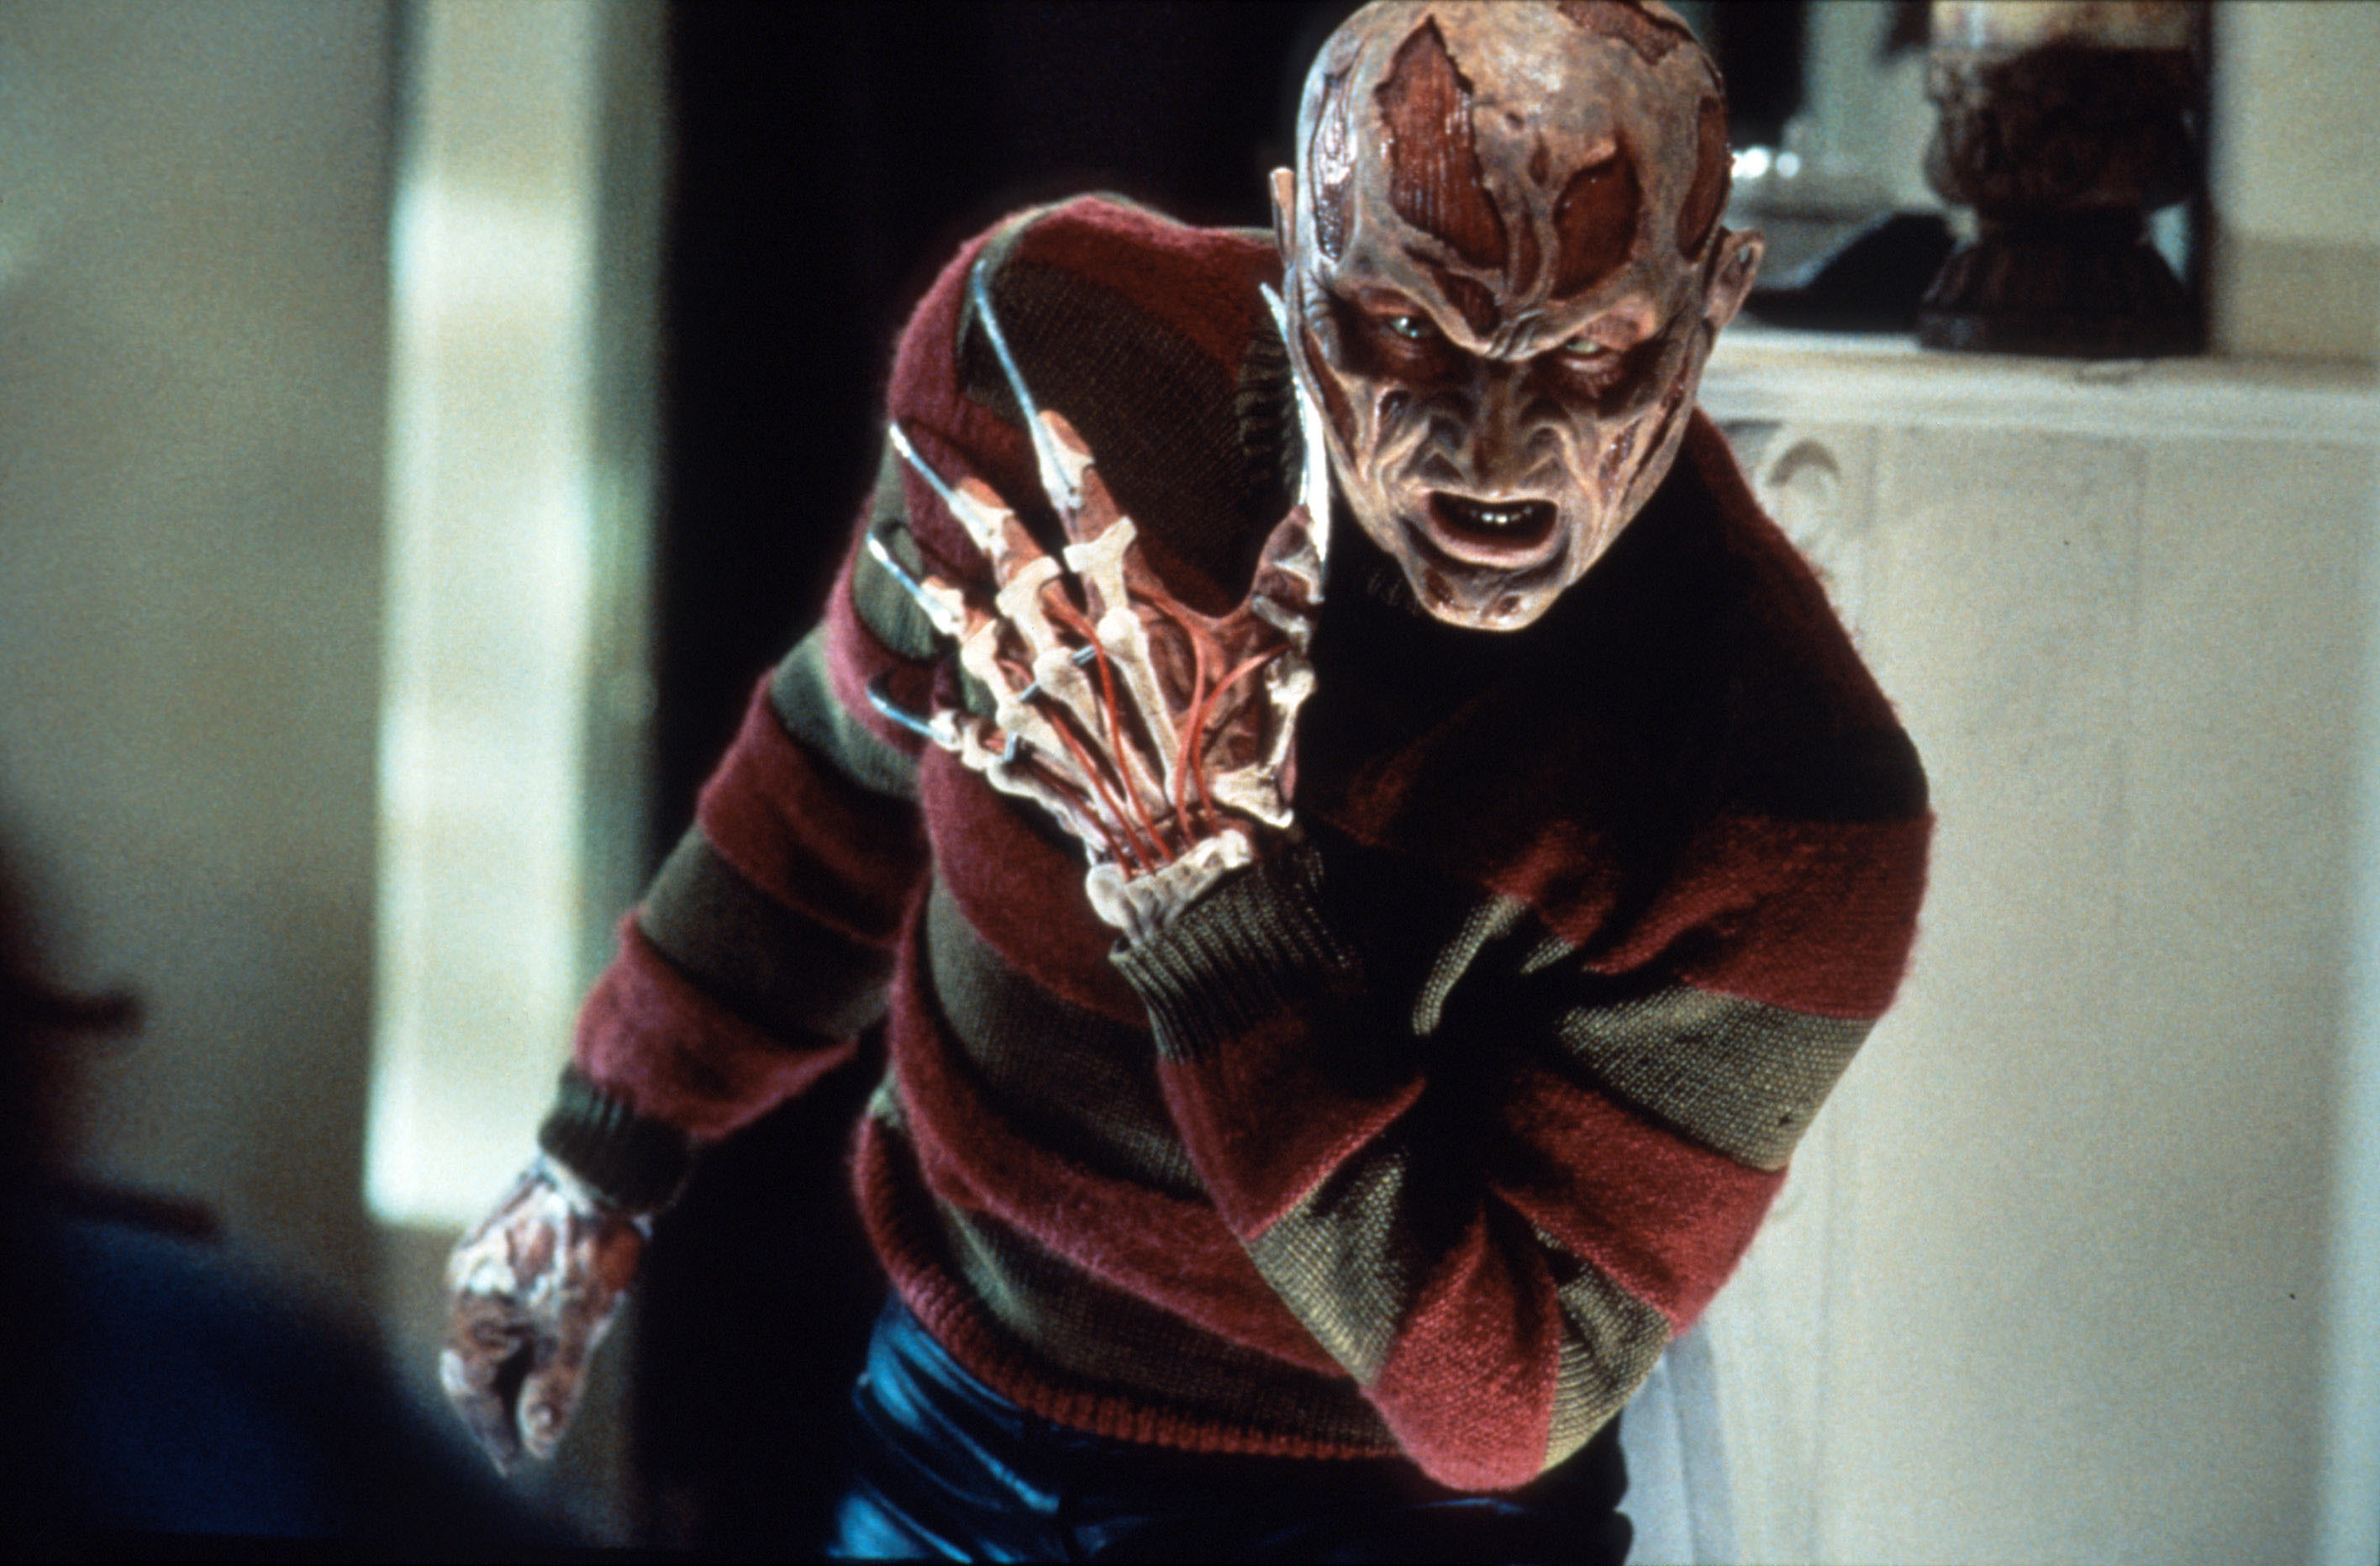 A demonic variation of Freddy Krueger poses menacingly.